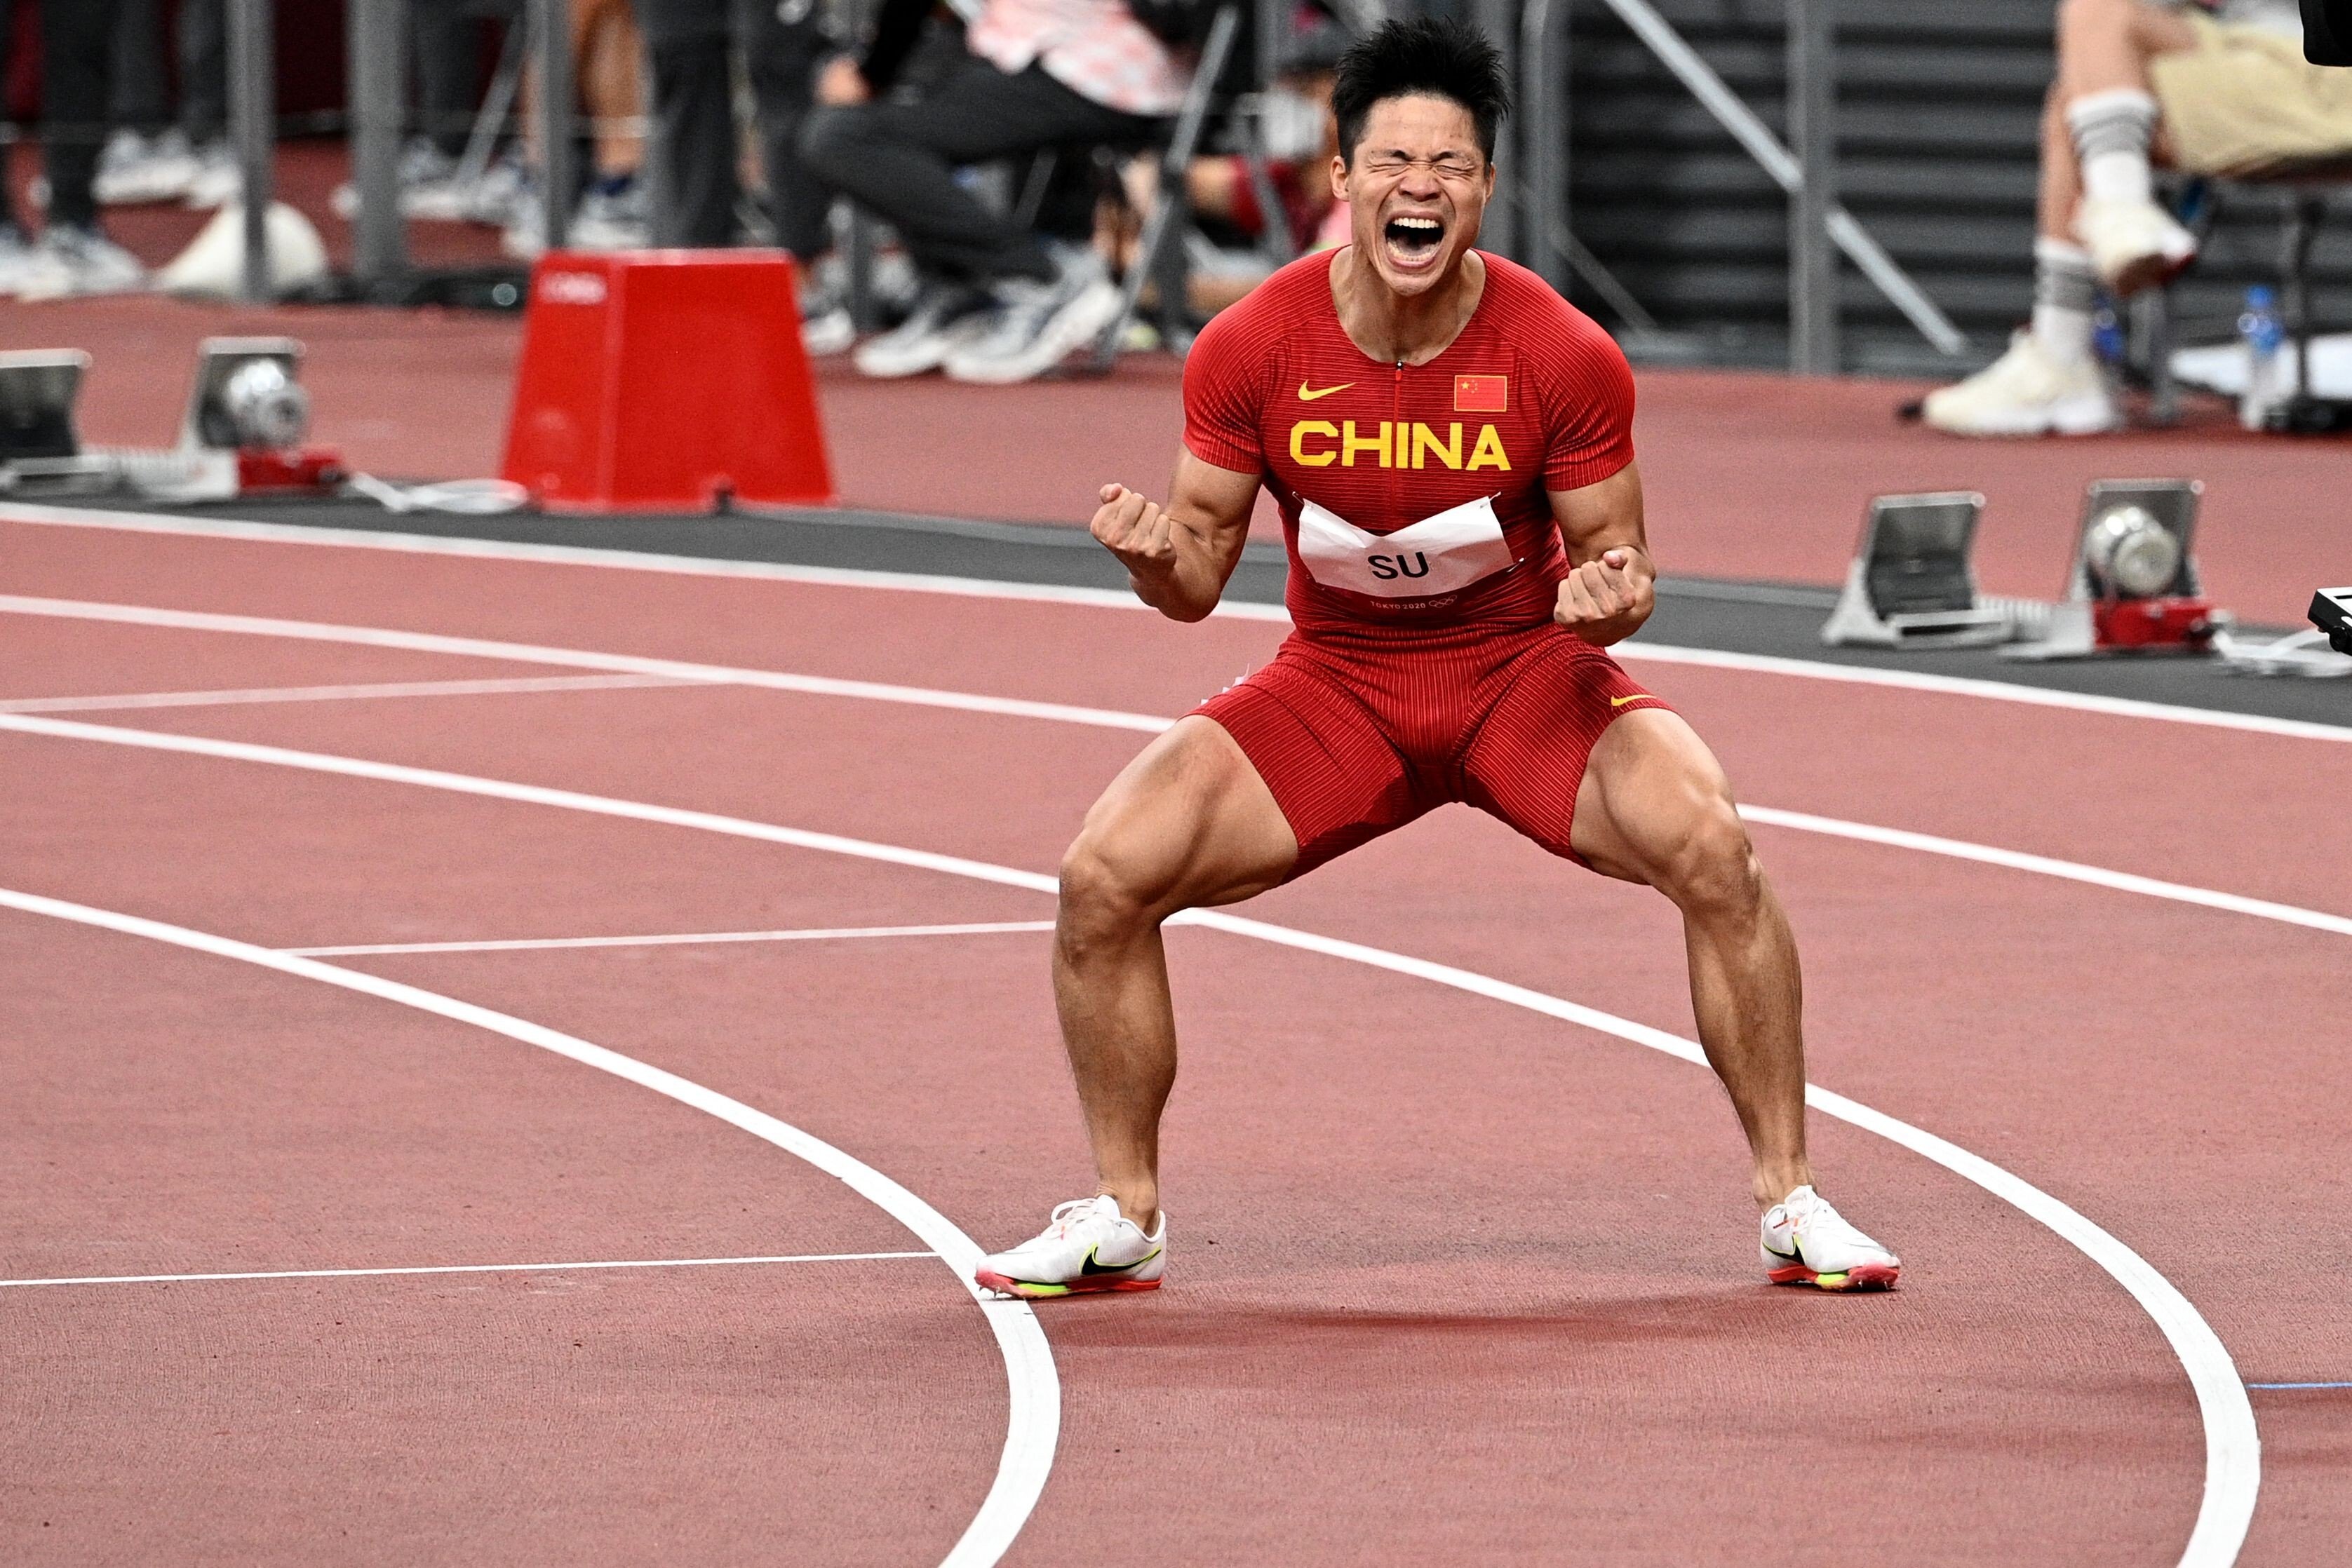 China's Su Bingtian celebrates after winning his men's 100m semi-final at the Tokyo 2020 Olympic Games. Photo: AFP